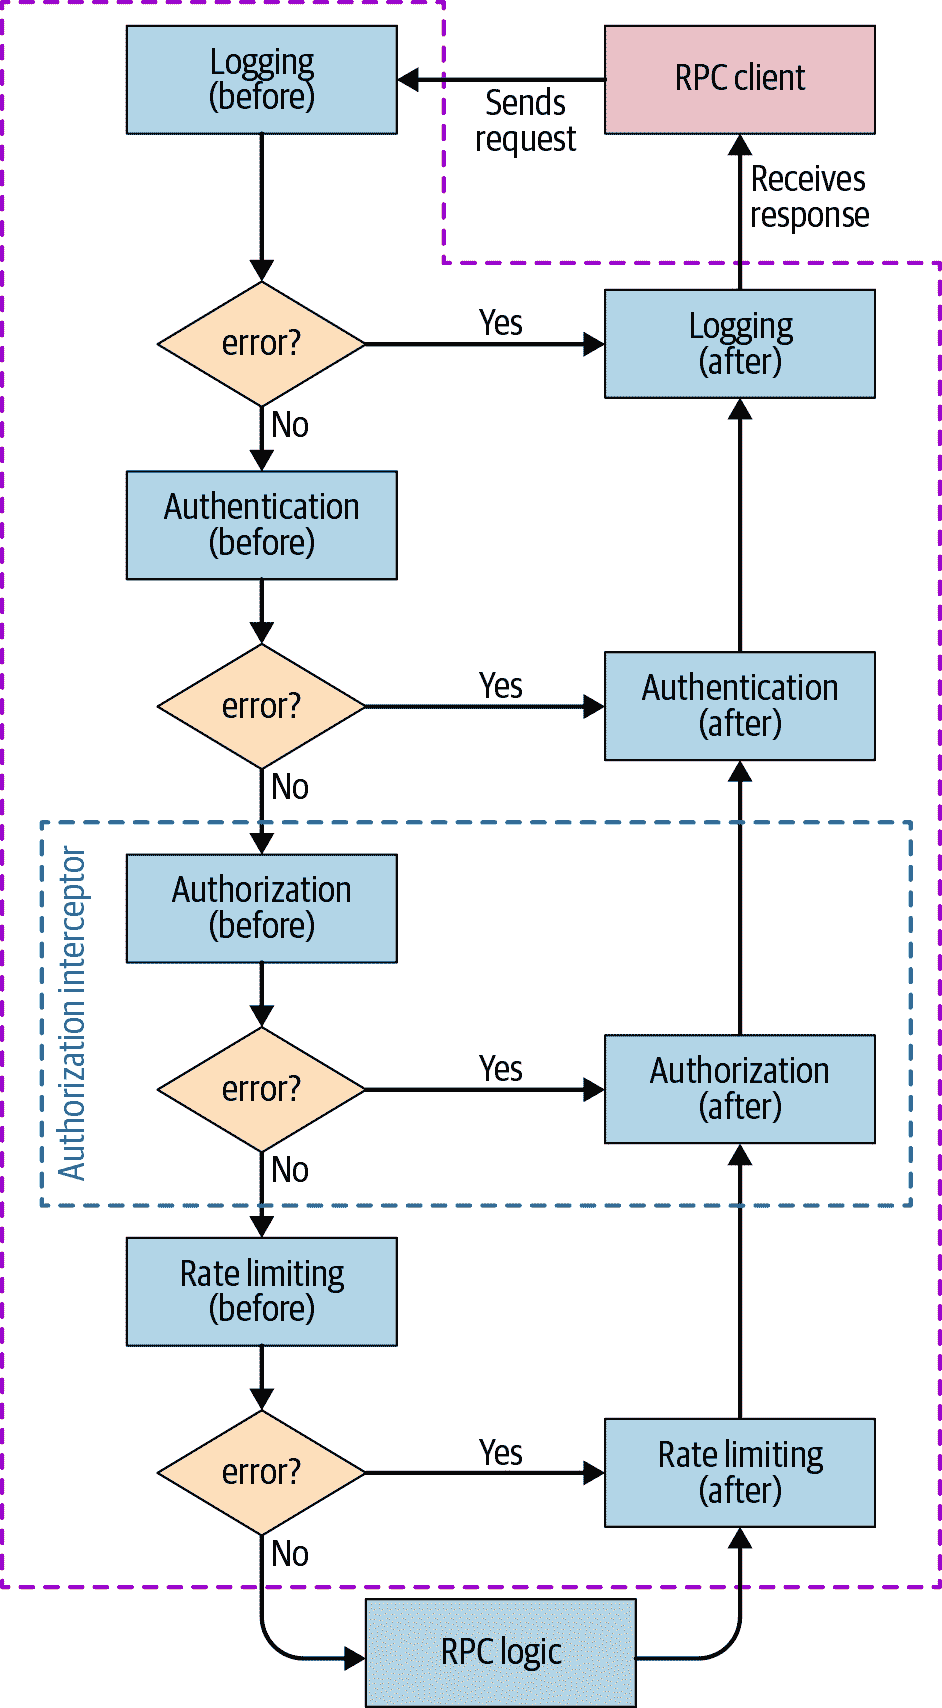 RPC 后端潜在框架中的控制流；典型步骤封装在预定义的拦截器中，授权作为示例突出显示